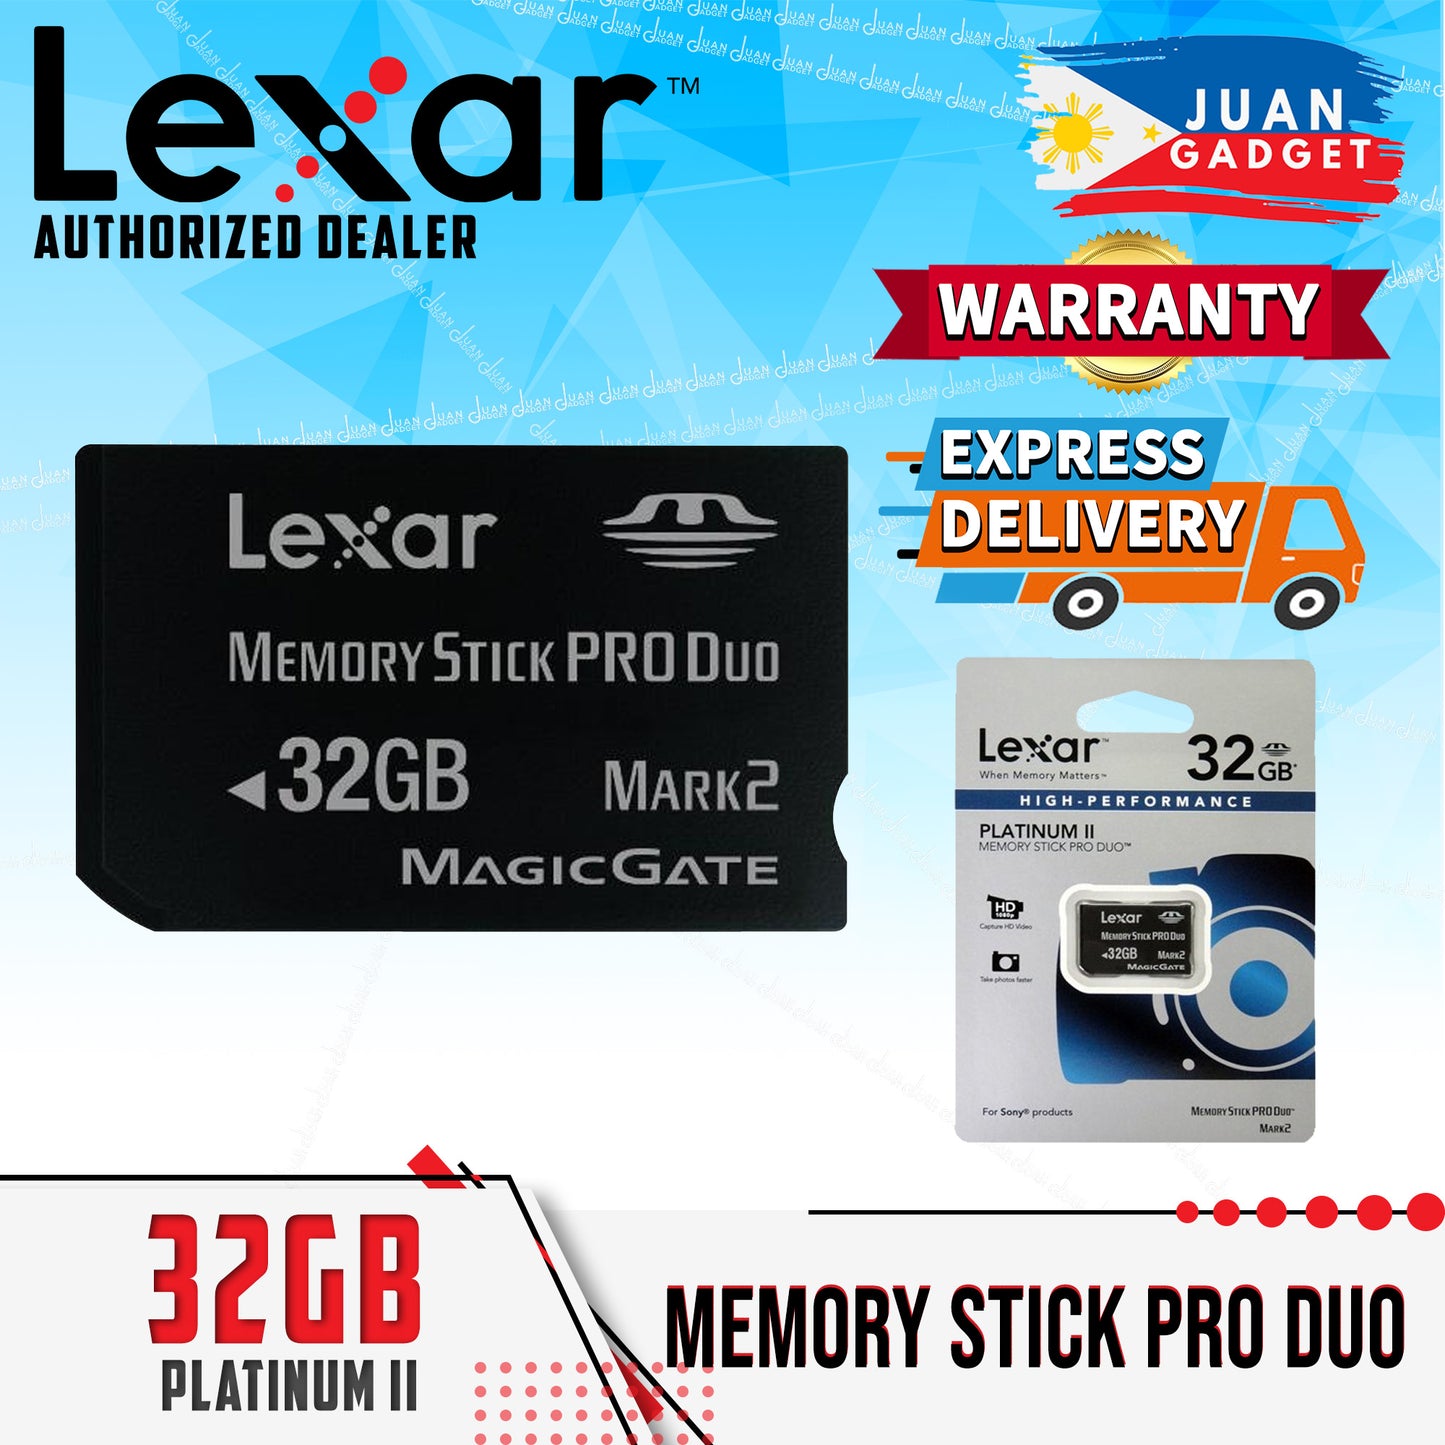 Lexar LMSPD32GBBAS Platinum II (40x) 32GB Memory Stick Pro Duo for Cameras, Computers, Laptops